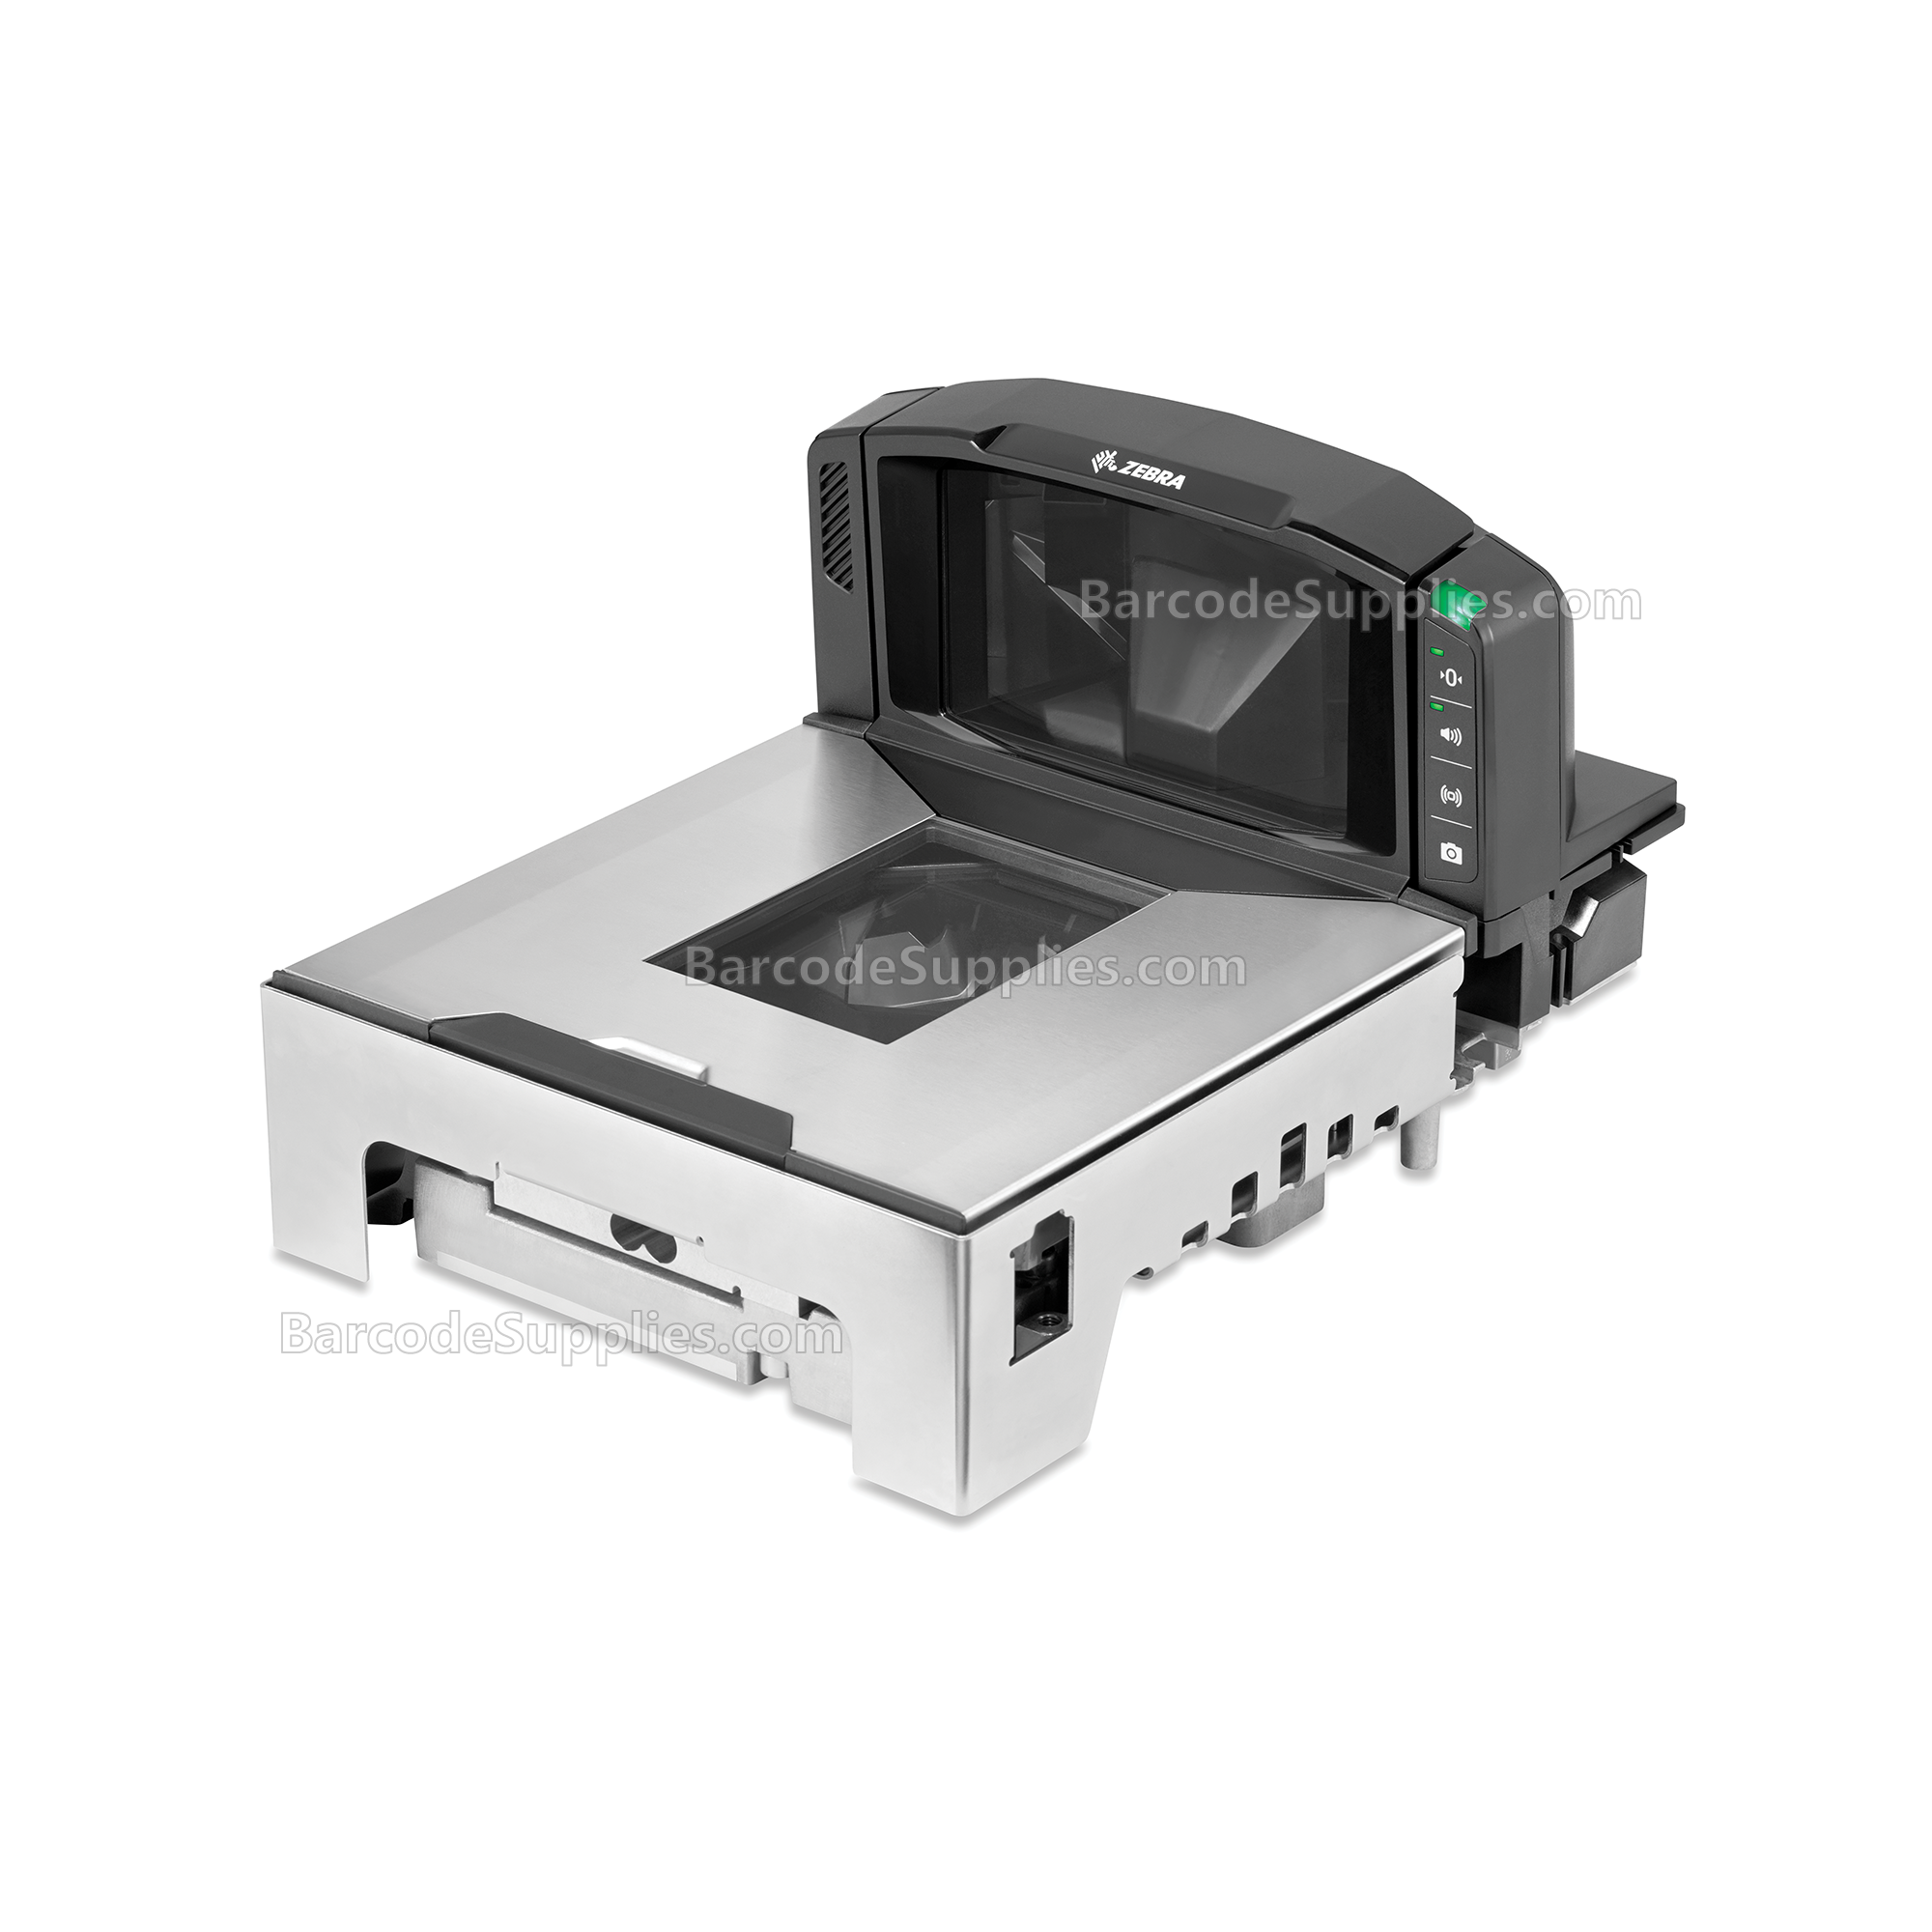 Zebra MP7000: Multiplane scanner, short, sapphire glass, color camera module landscape, Worldwide